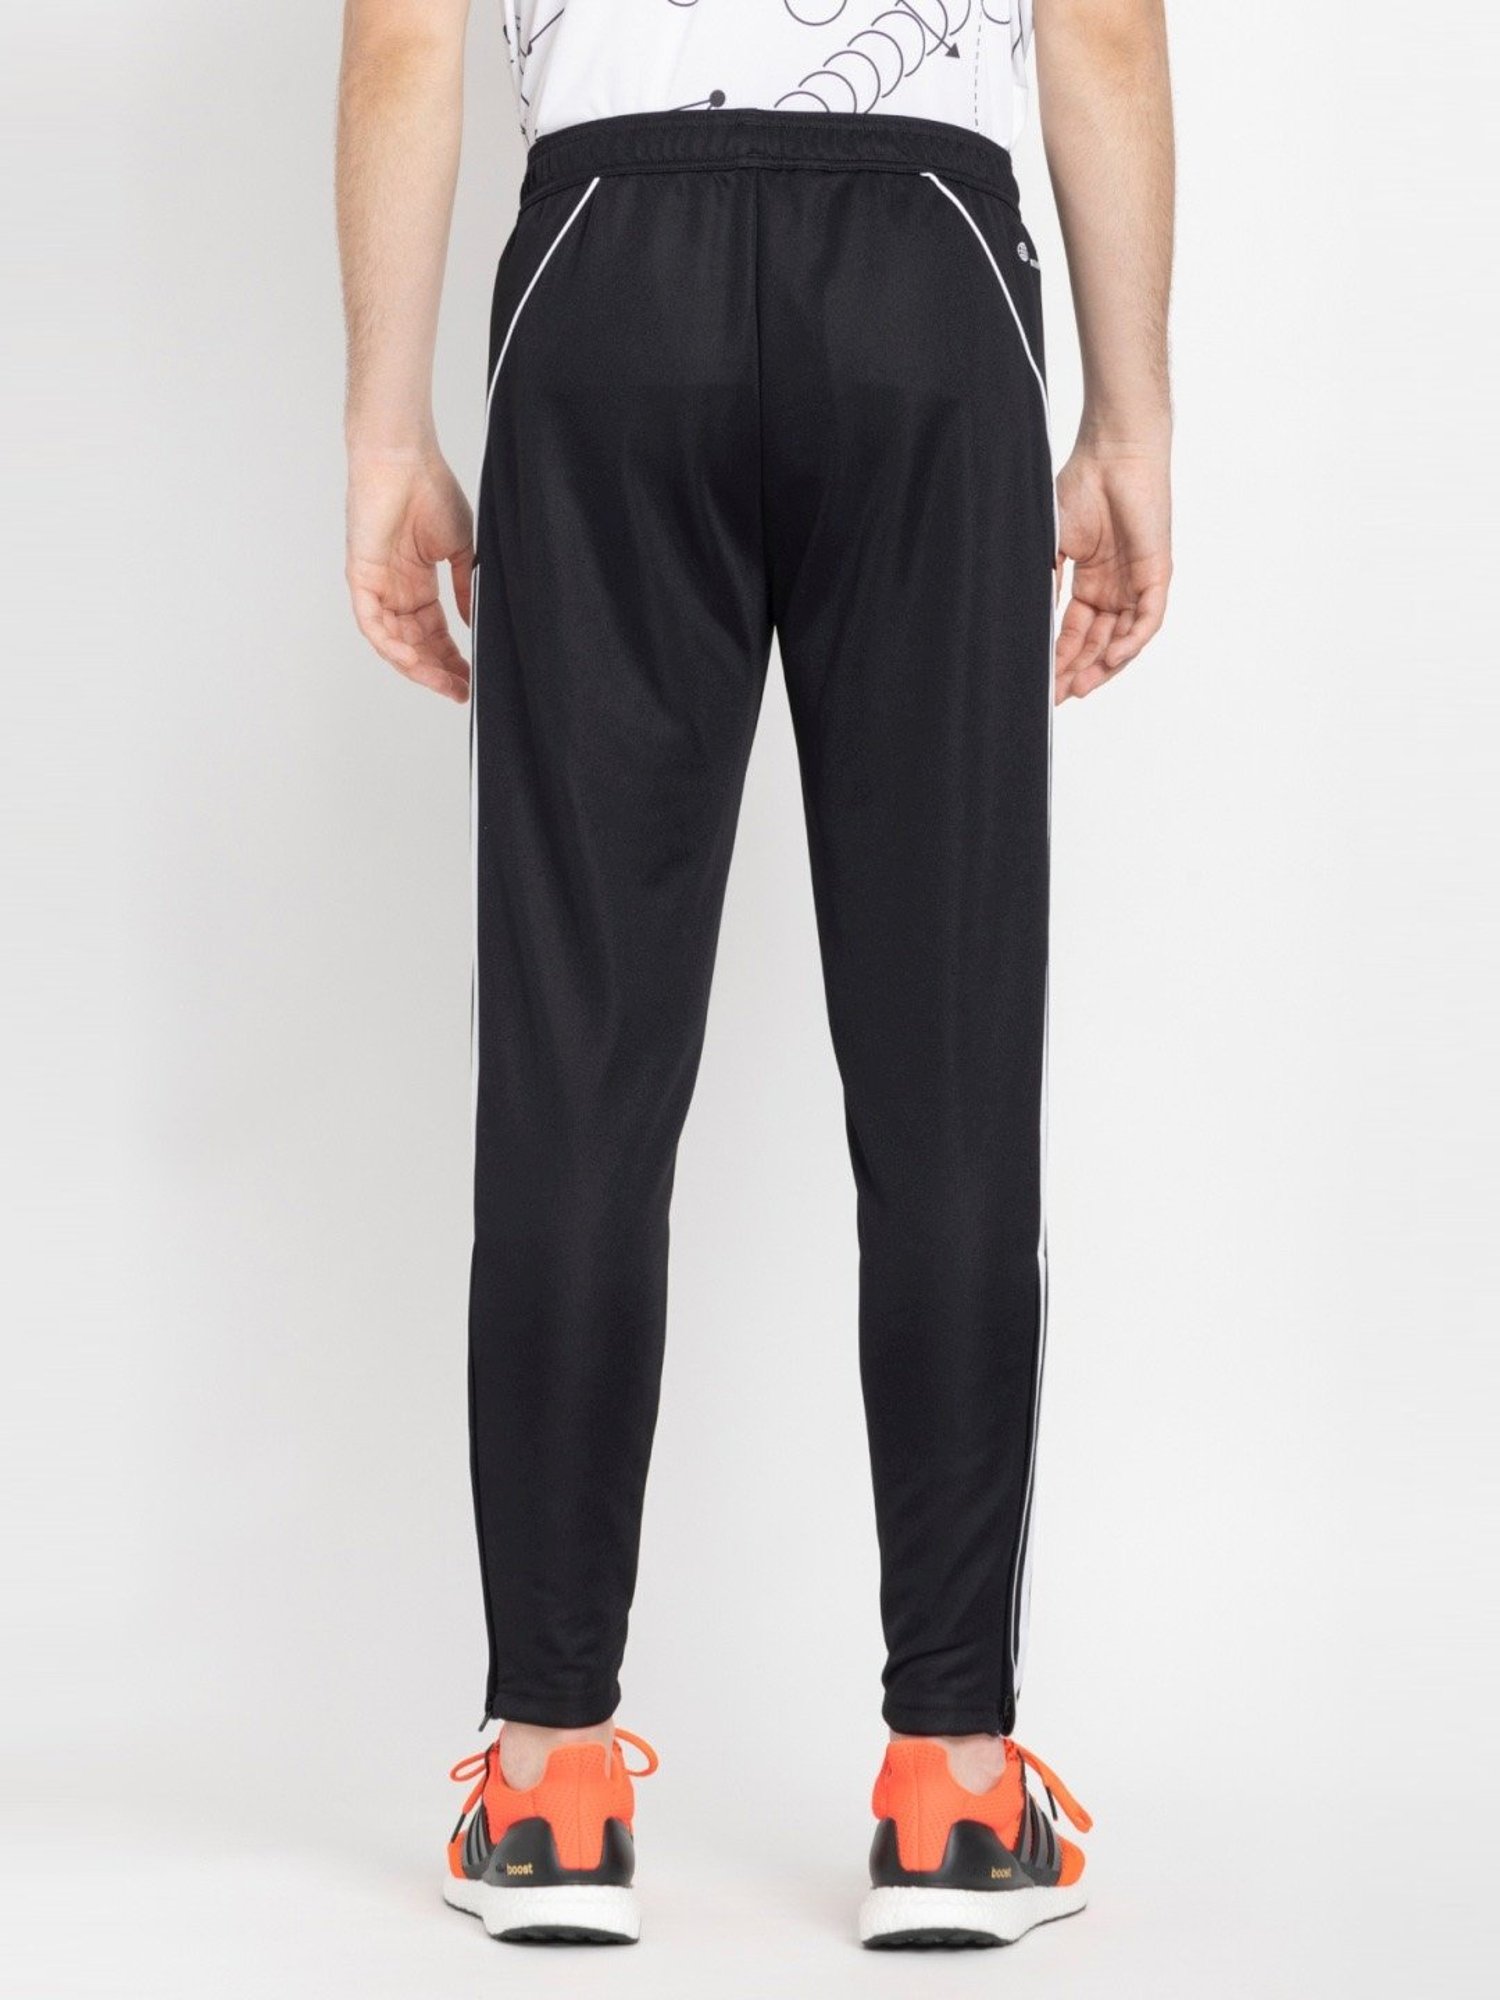 Adidas Beckenbauer Track Pants Mens Size Large Slim Fit Tapered Black NEW  HK7403 | eBay